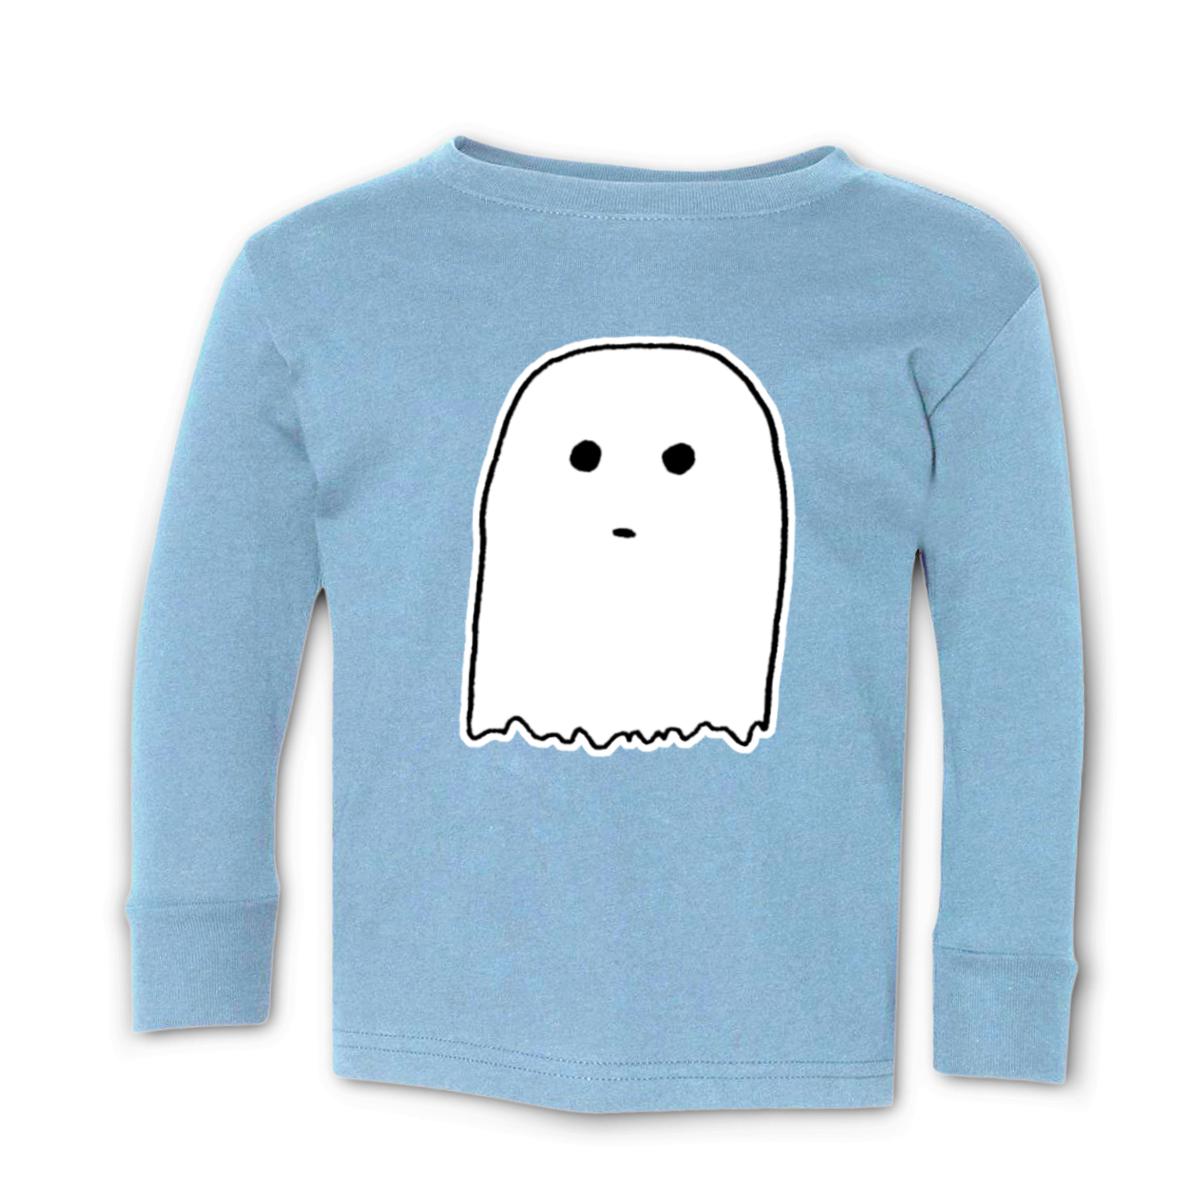 Ghostie Toddler Long Sleeve Tee 4T light-blue